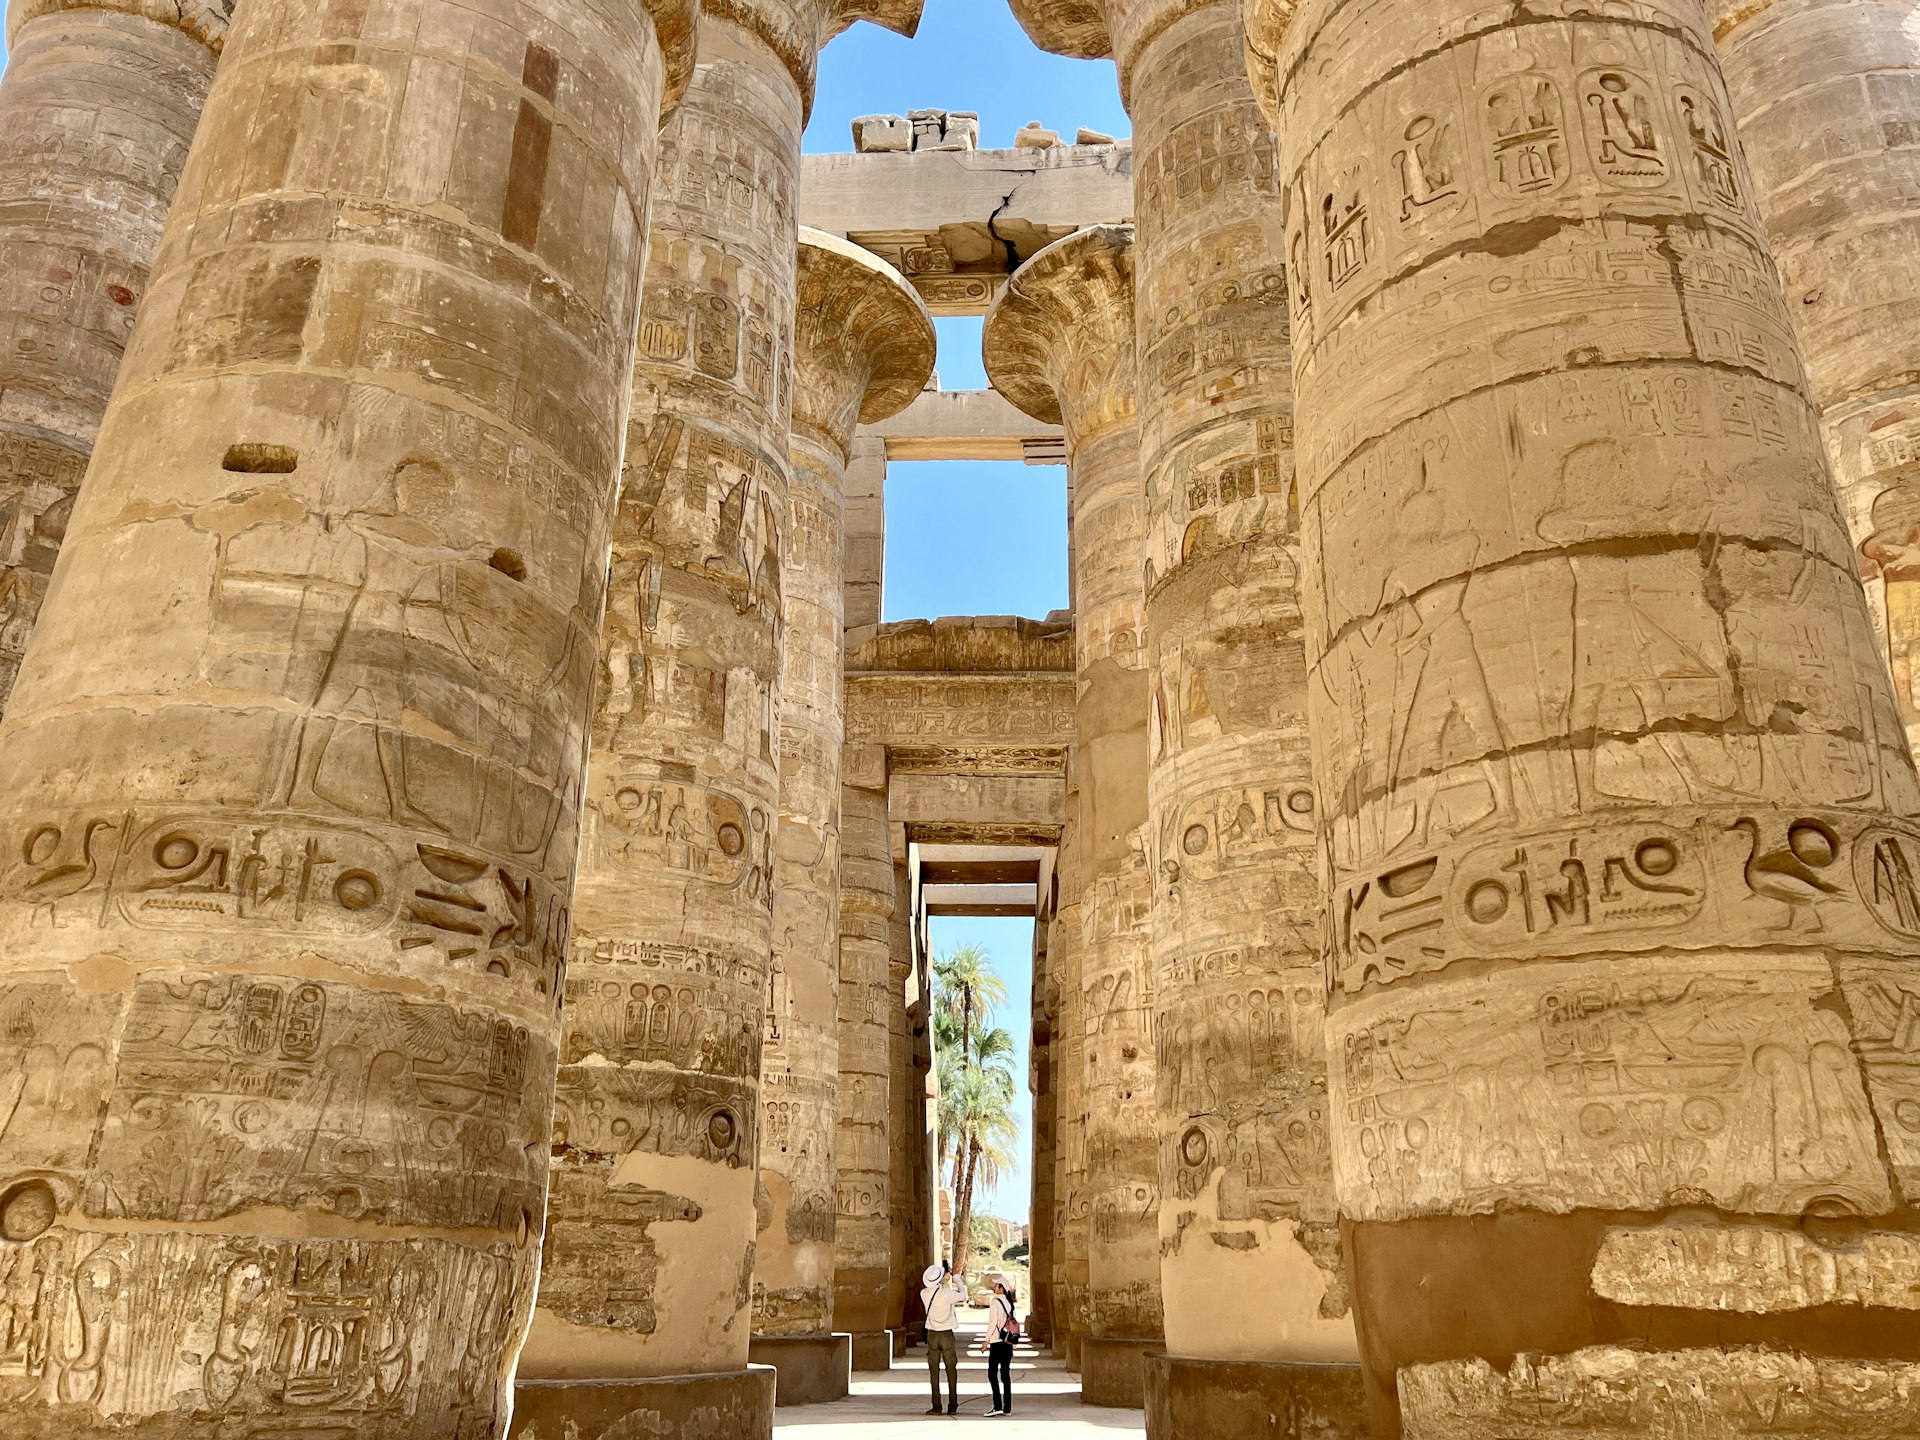 Huge ornate temple towers of Karnak, Egypt